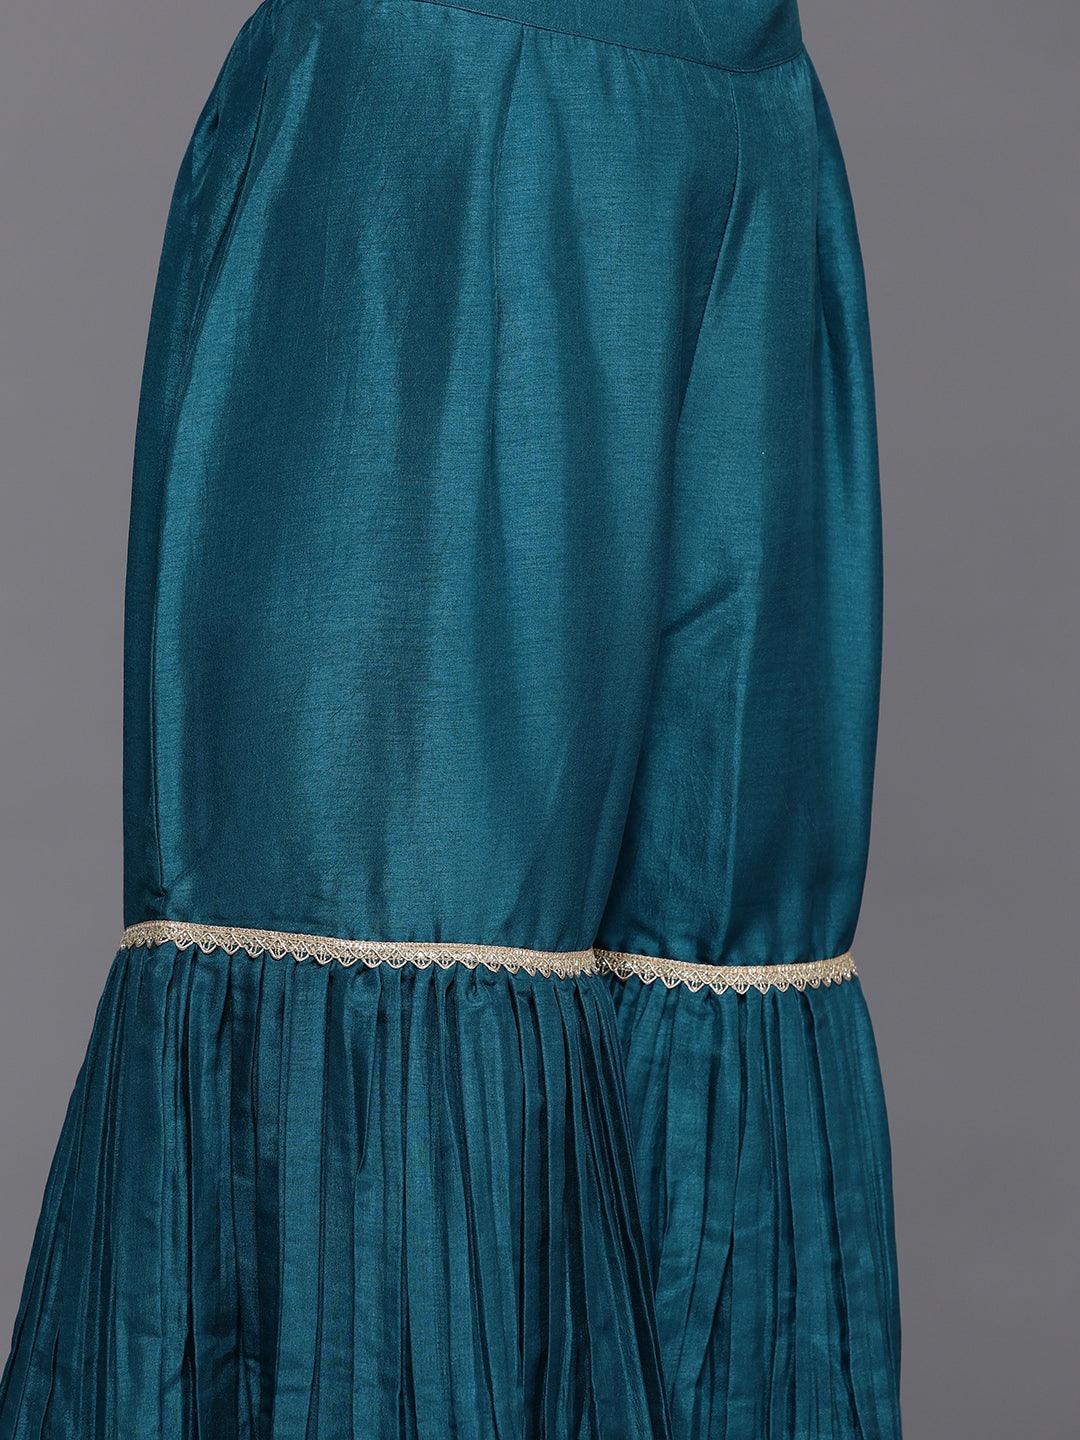 Libas Art Blue Embroidered Silk Anarkali Suit Set - Libas